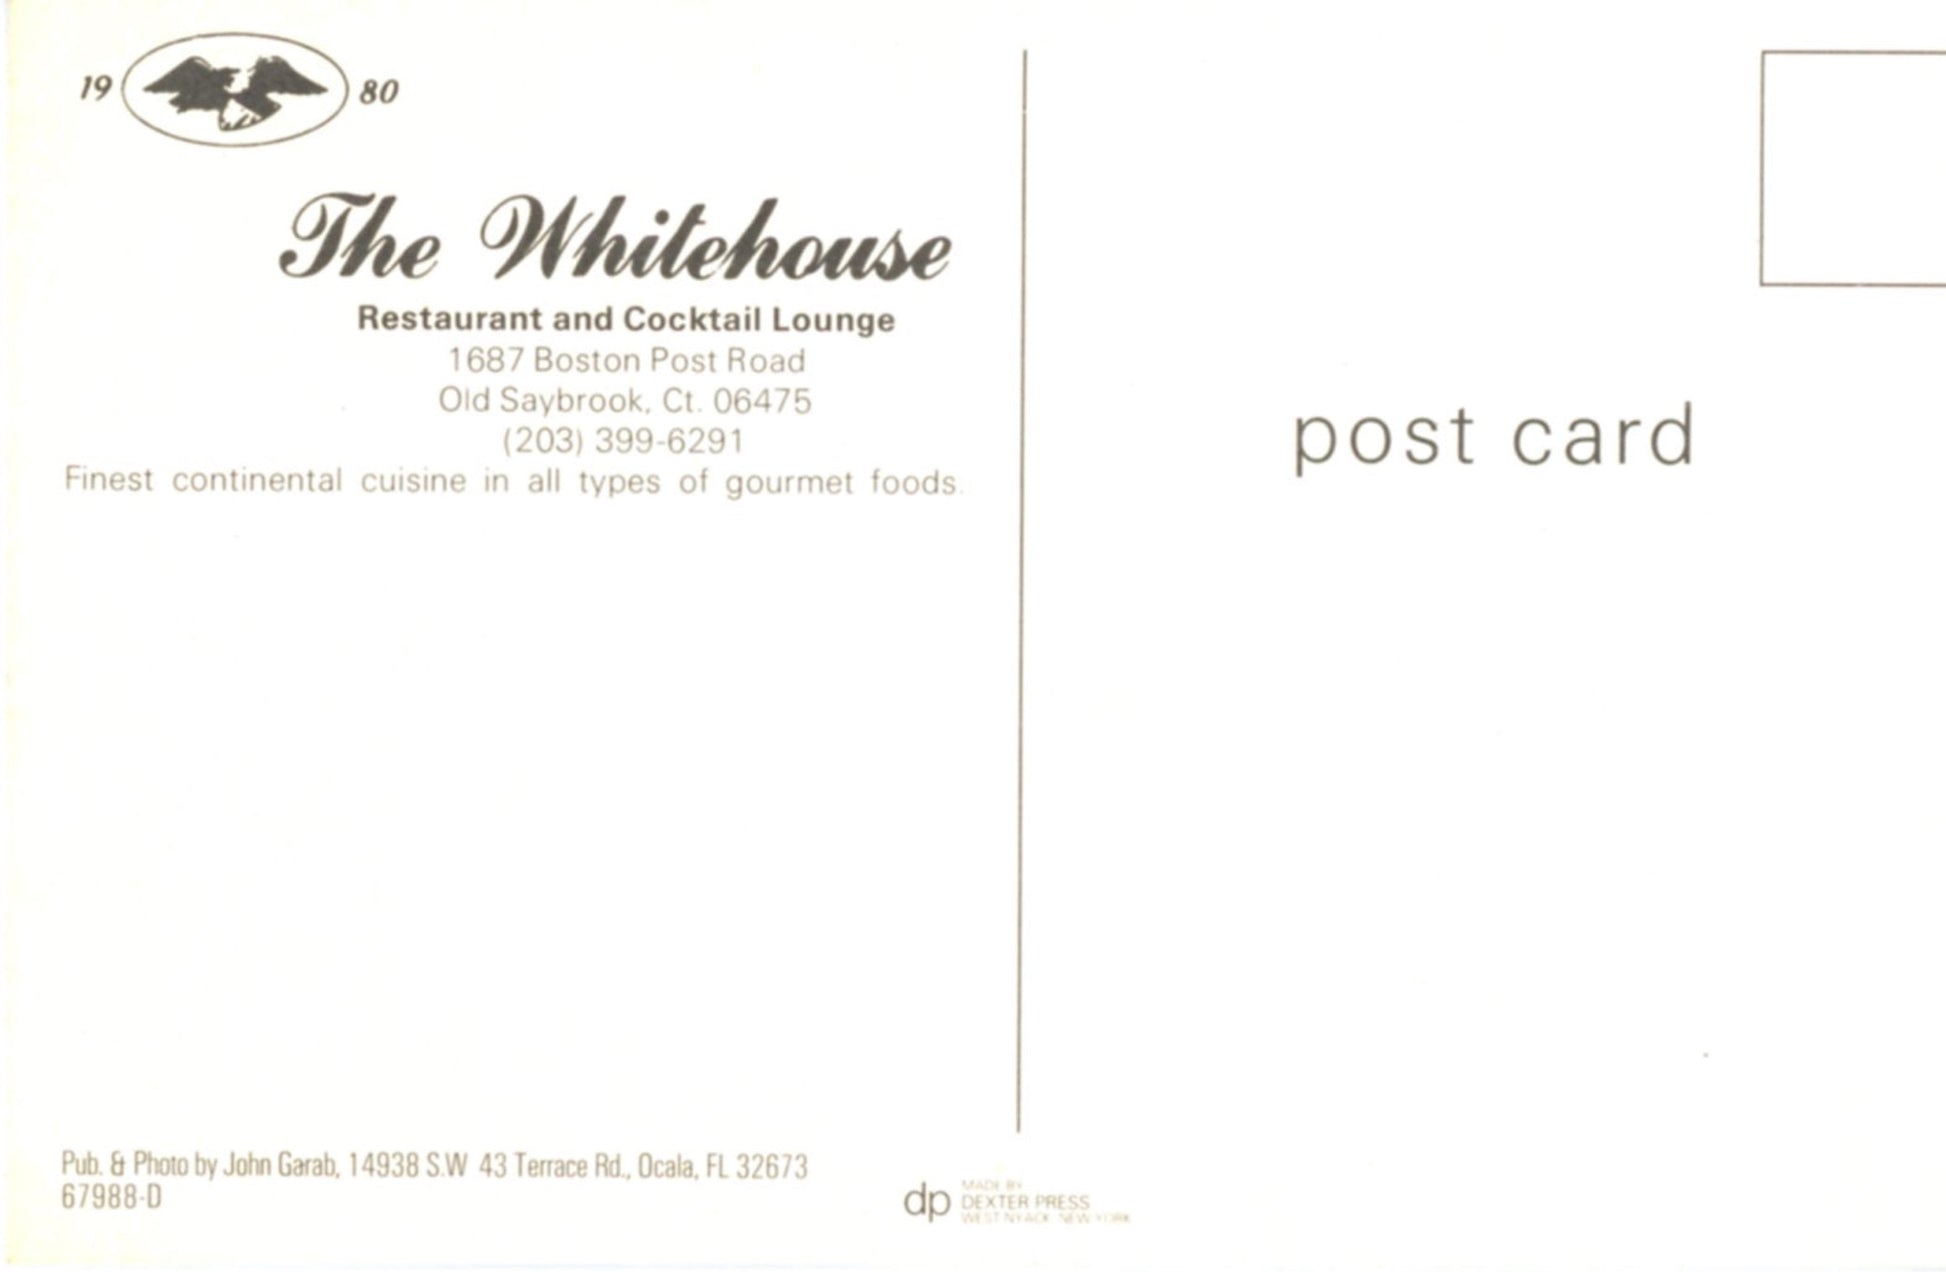 The Whitehouse Restaurant OLD SAYBROOK CONNECTICUT Vintage Postcard